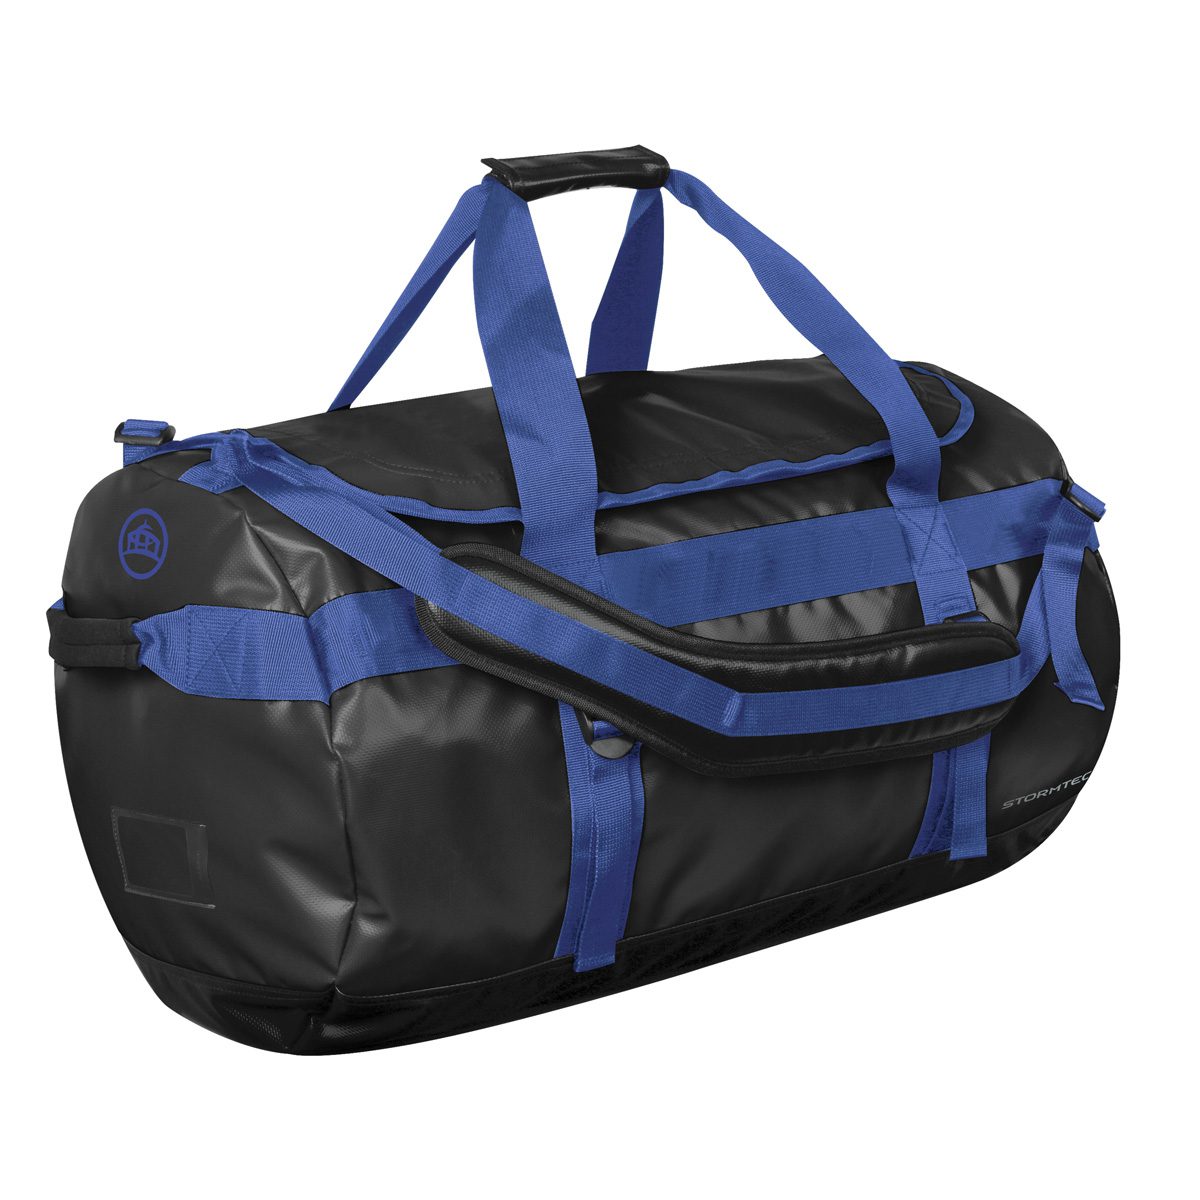 Stormtech Atlantis Waterproof Gear Bag - Medium #GBW-1MLE Black / Azure Blue